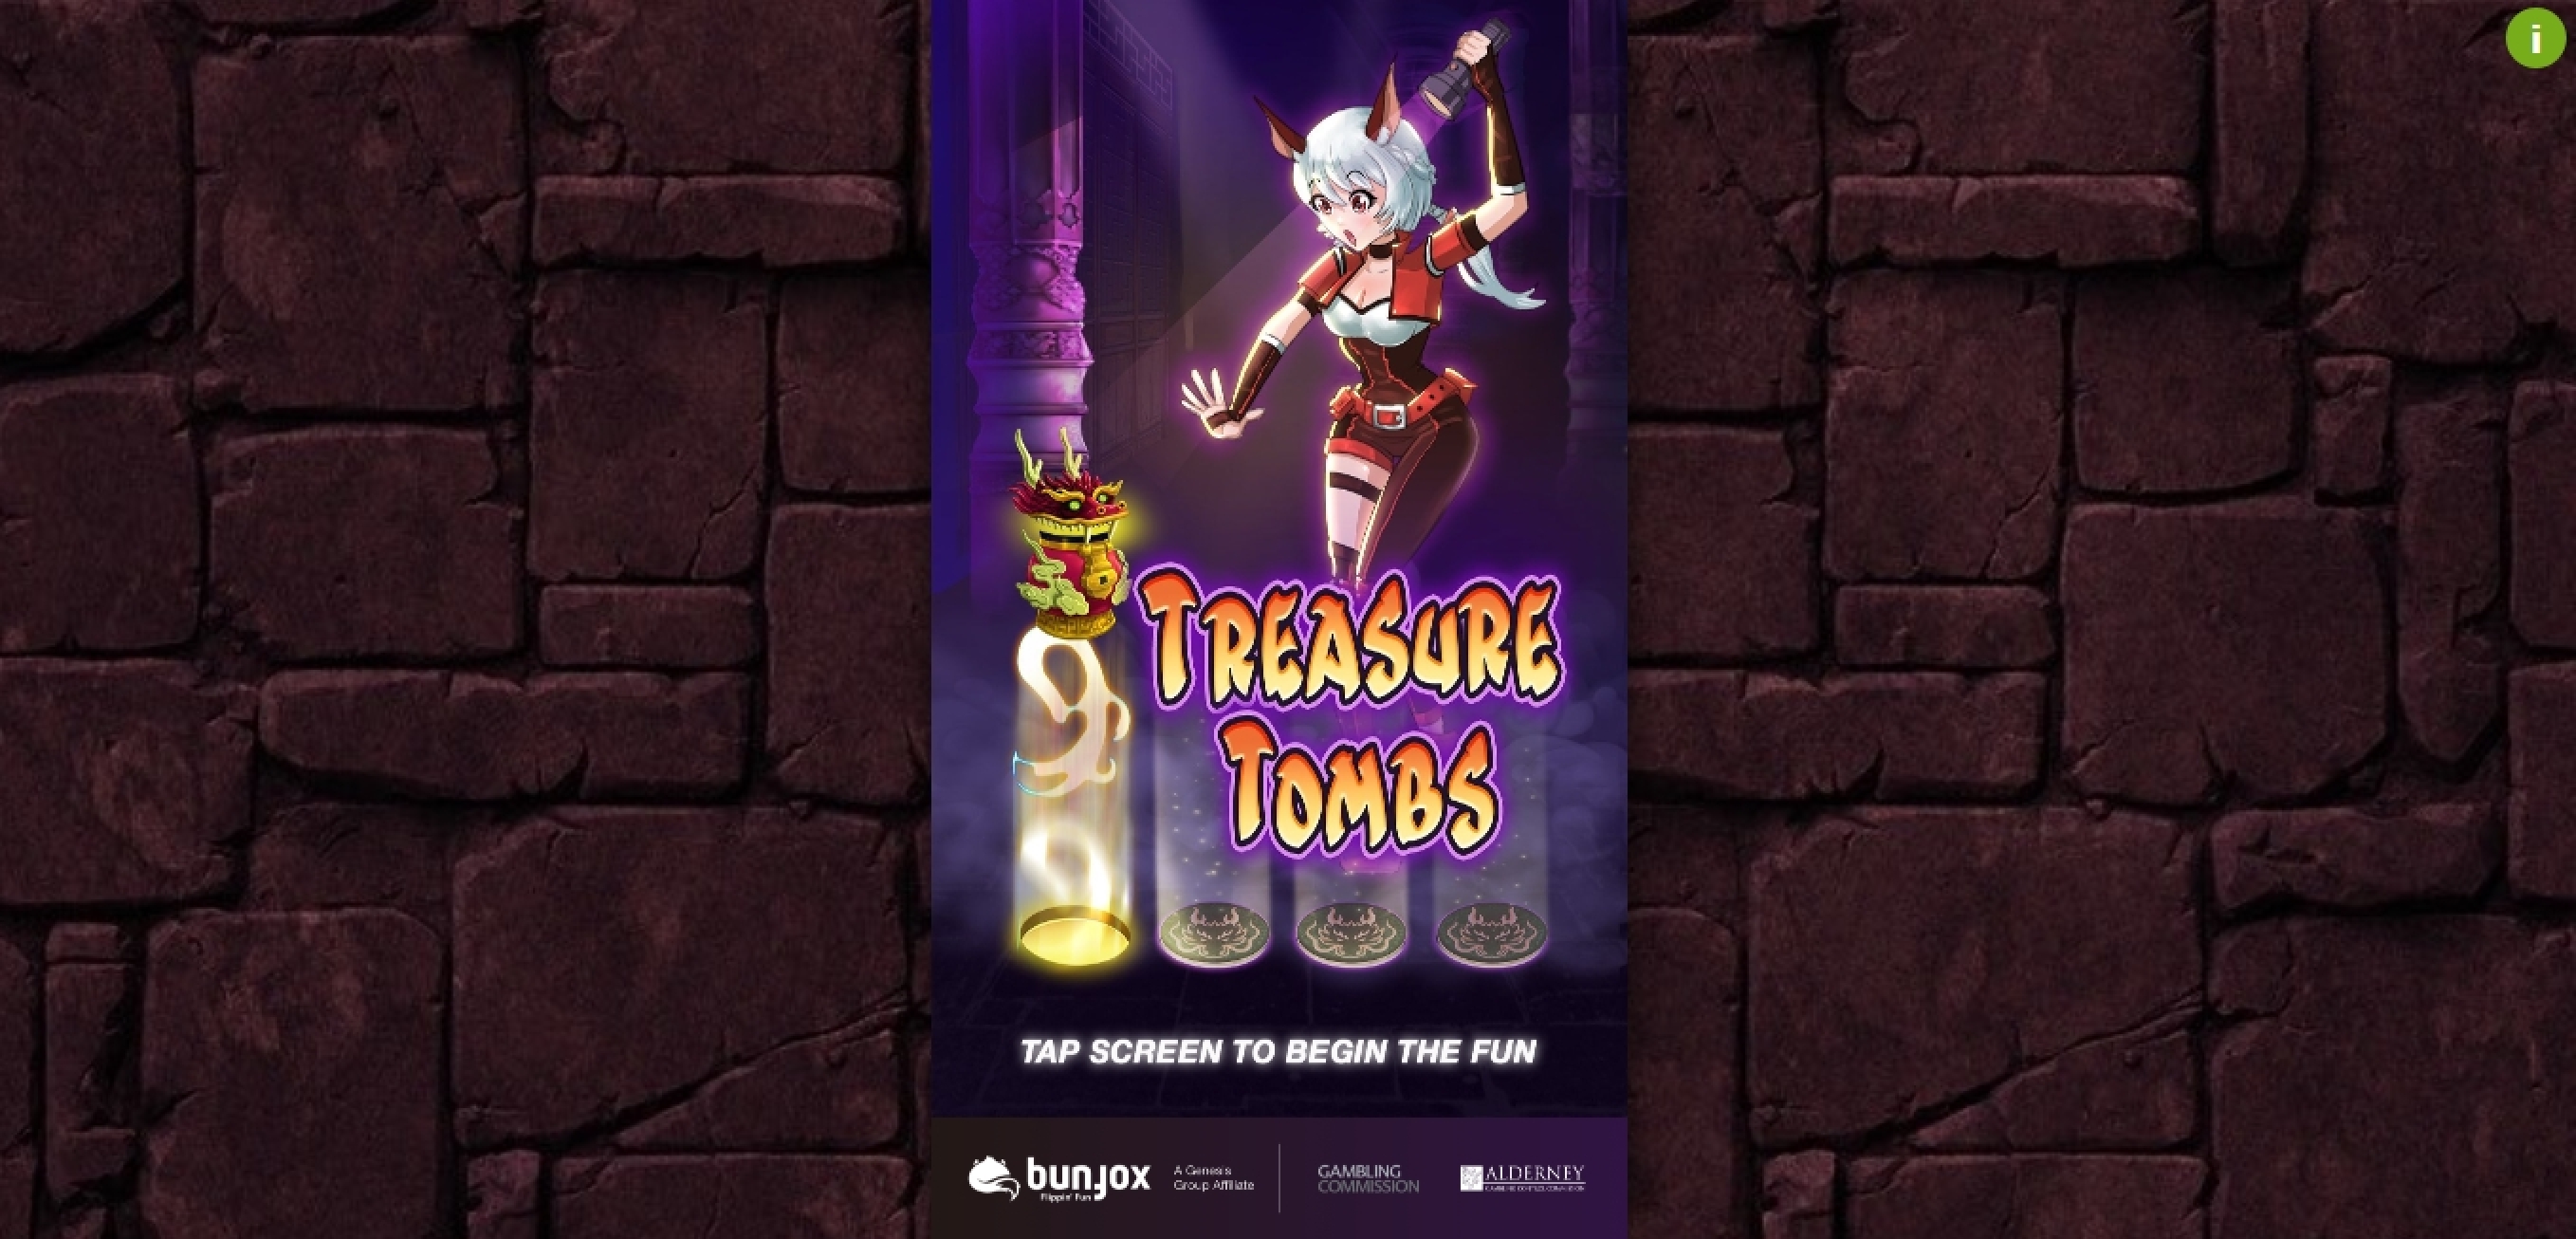 Play Treasure Tombs Free Casino Slot Game by Bunfox Games